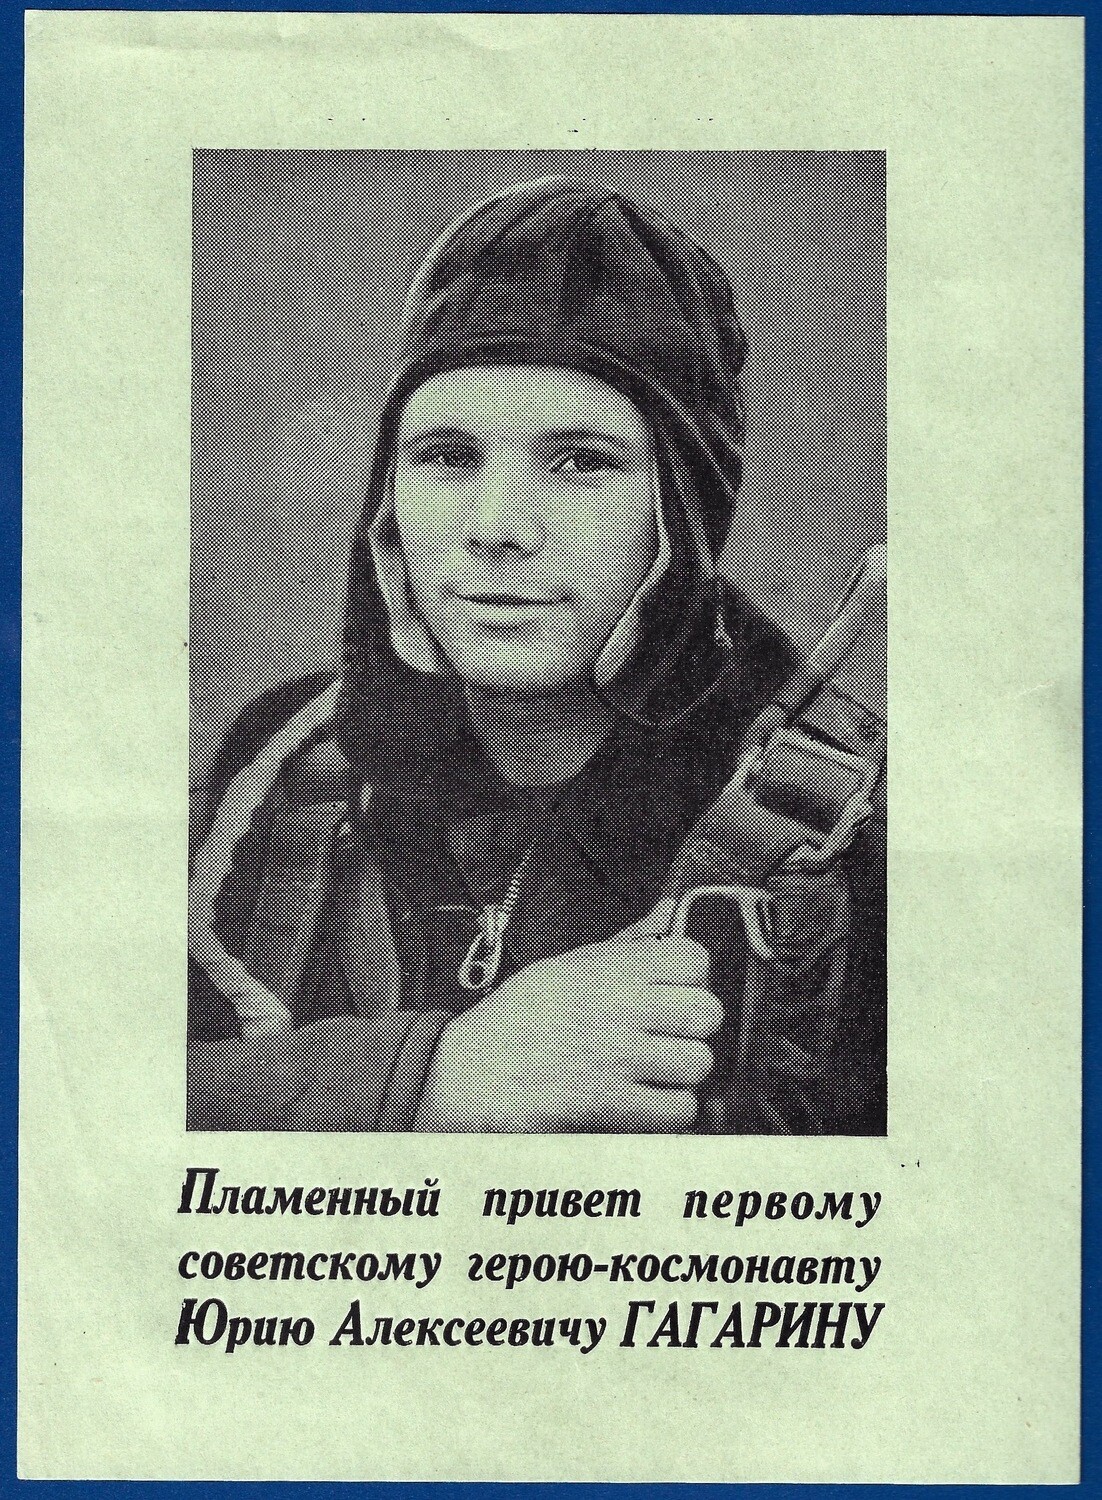 Yuri Gagarin's Original Soviet Leaflet GREEN